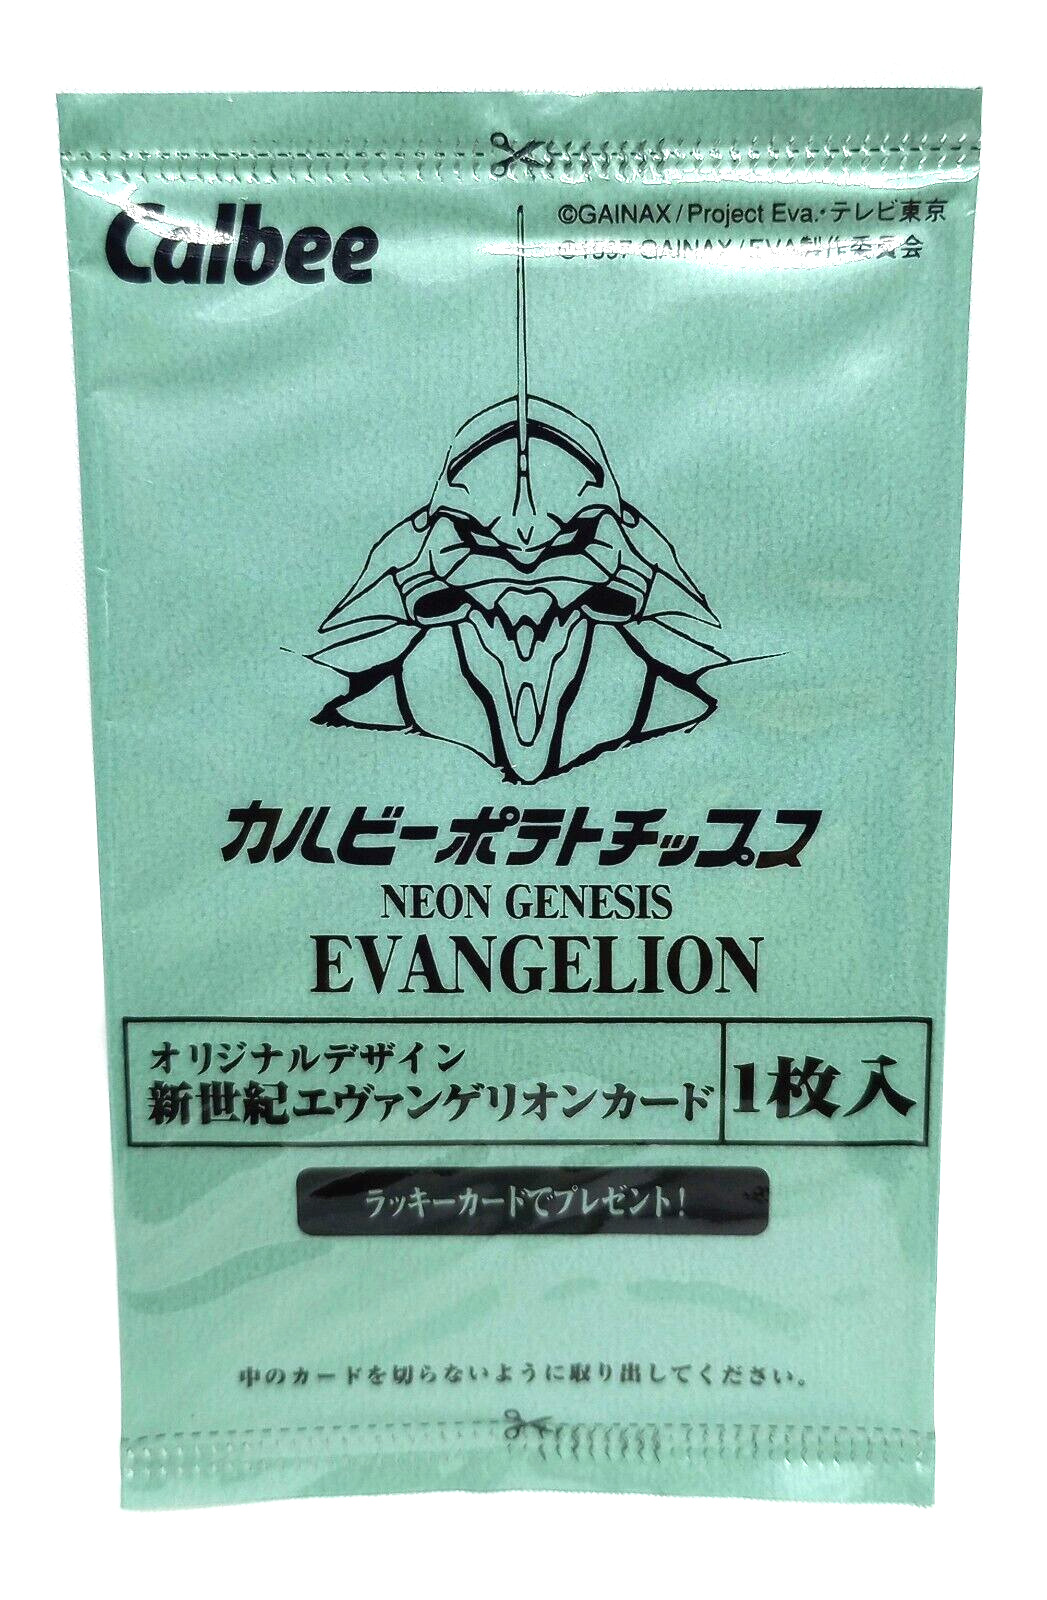 VTG 1997 Neon Genesis Evangelion SEALED CALBEE CARD CARDDASS PACK chip bag promo